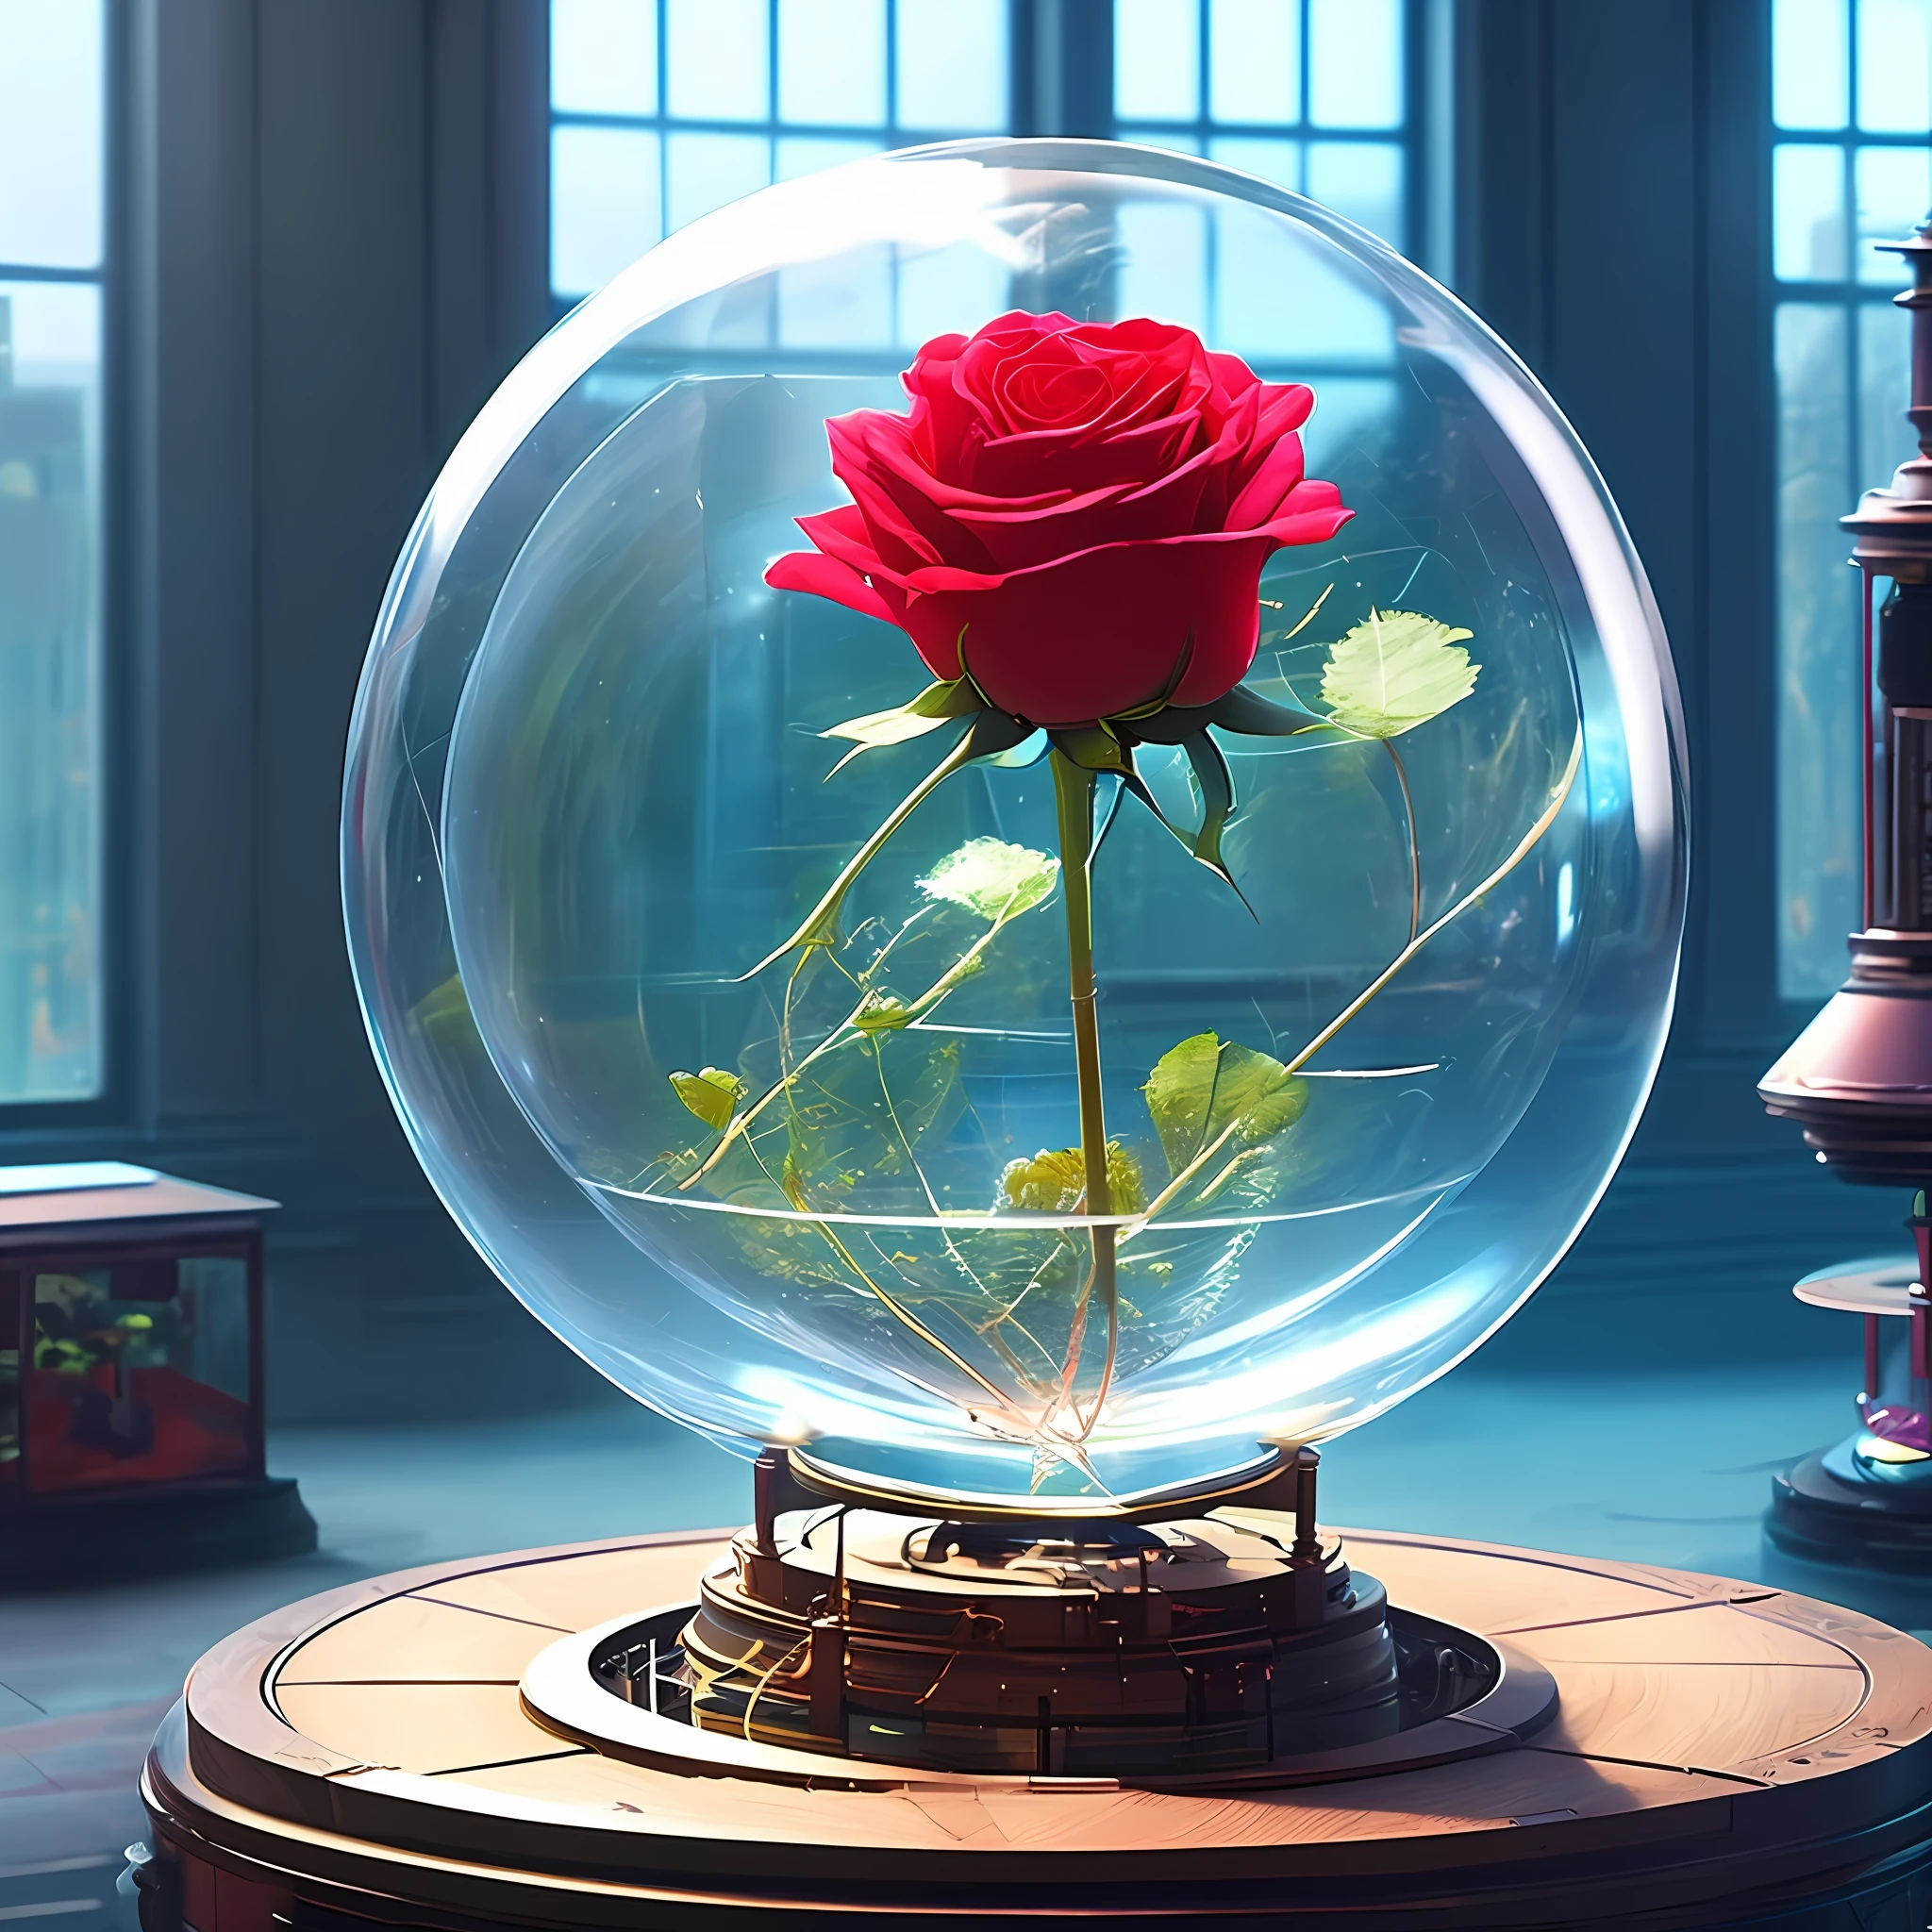 there is a rose floating in a 유리 돔 on a music box base, 멜랑코닉 로즈 소프트, 우아하고 우아한 빛, 붉은 장미, 투명 유리 꽃병, 우아한 아가씨, 유리 돔s, 내츄럴 포인트 로즈, 아름답게 조명, 우아한 빛, 우아하고 우아한, 로잘리아, 유리 돔, 아름다운 조명, 짧은 둥근 유리 꽃병에,  거대한 기계 장미, SF, 발명, 공상 과학, 복고풍 미래주의